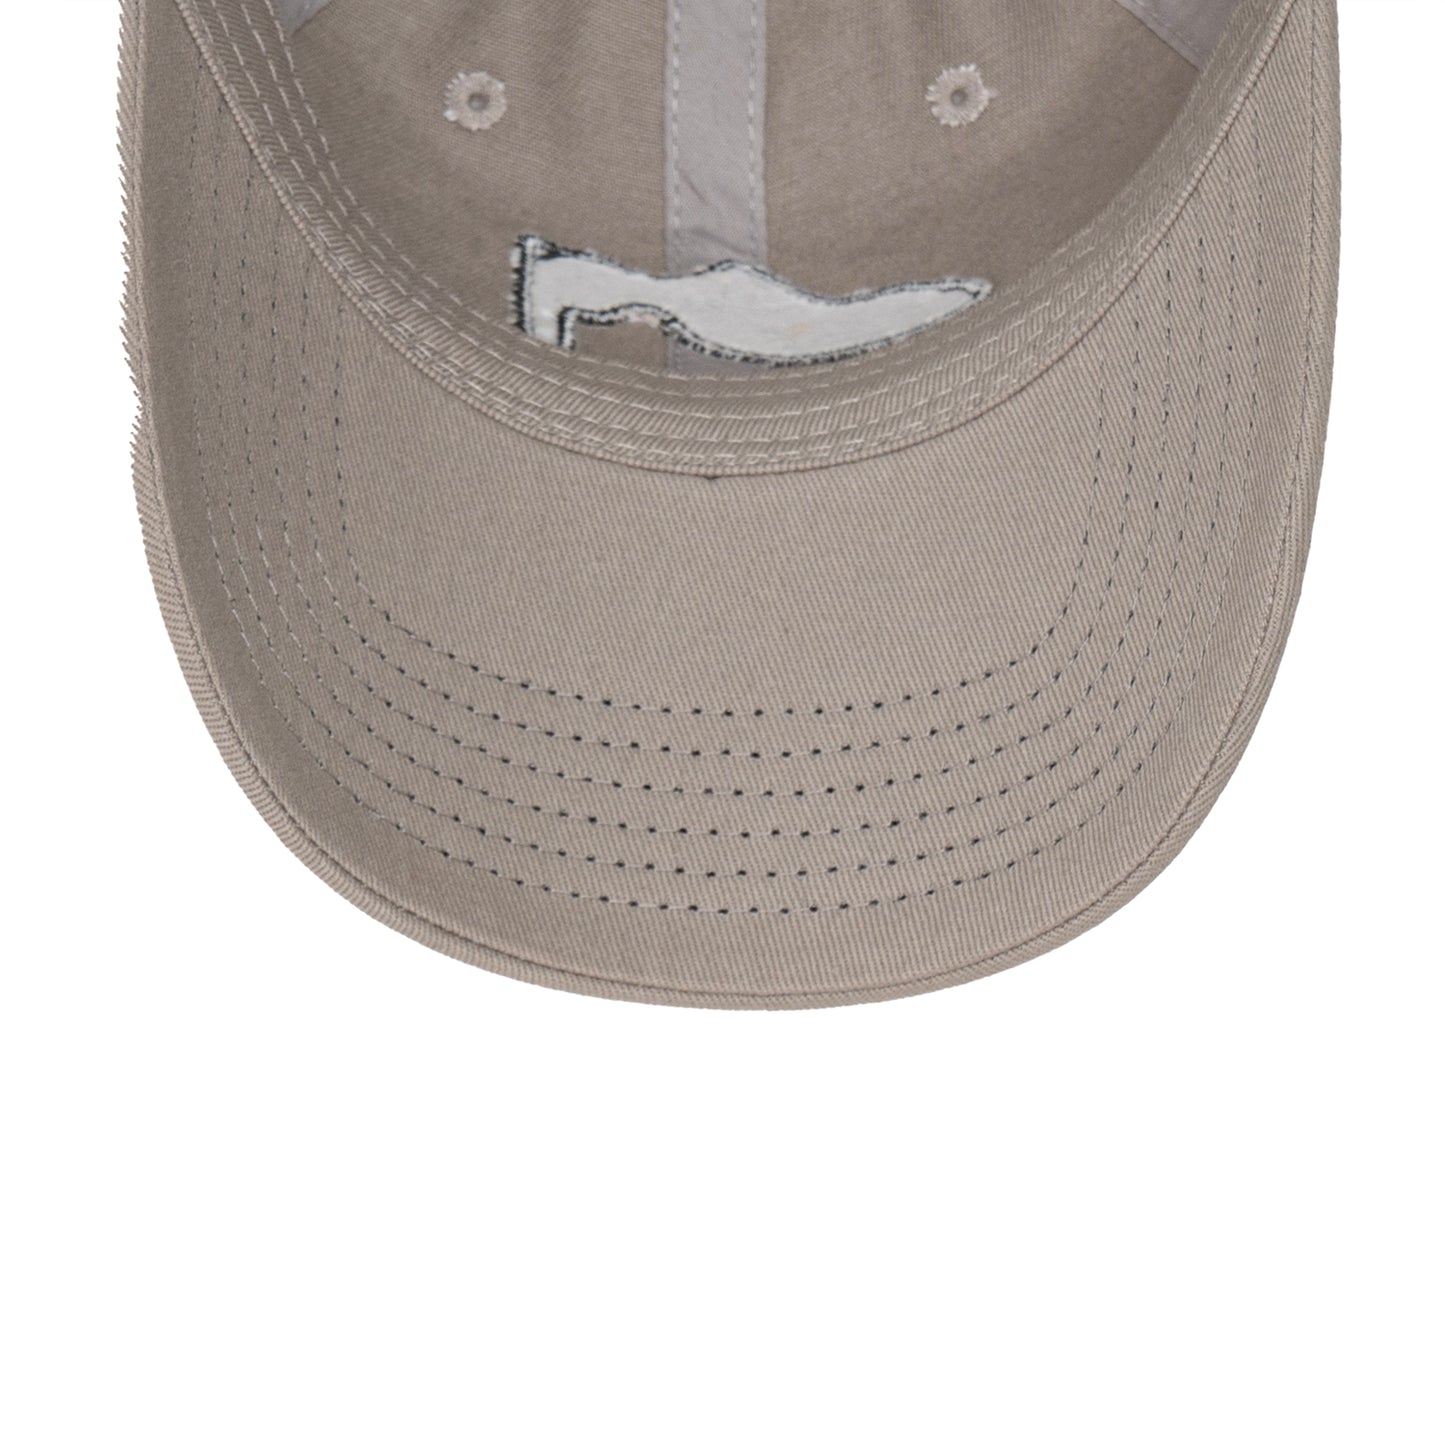 Sebring Dad Hat - Light Grey